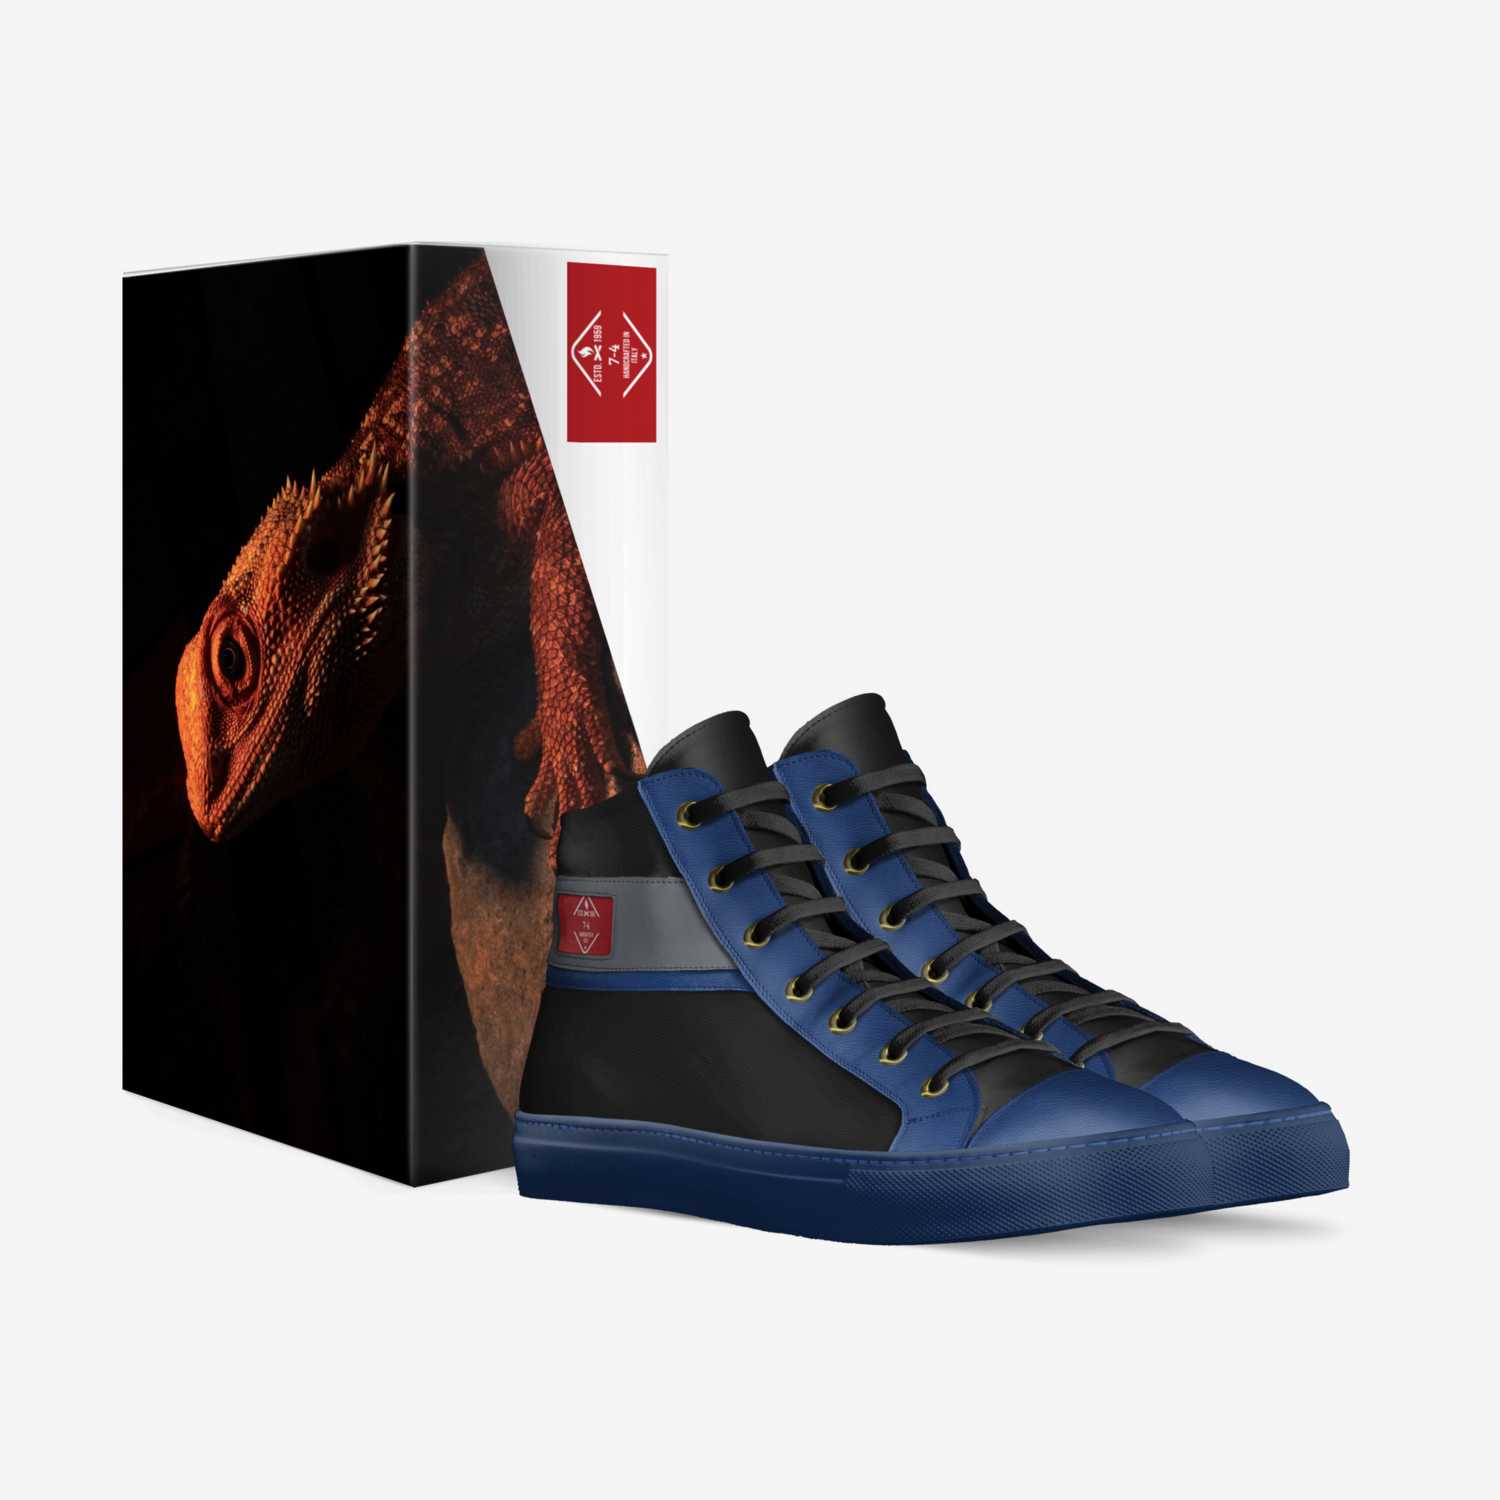 7-4 custom made in Italy shoes by Eleazar Avila Jr | Box view